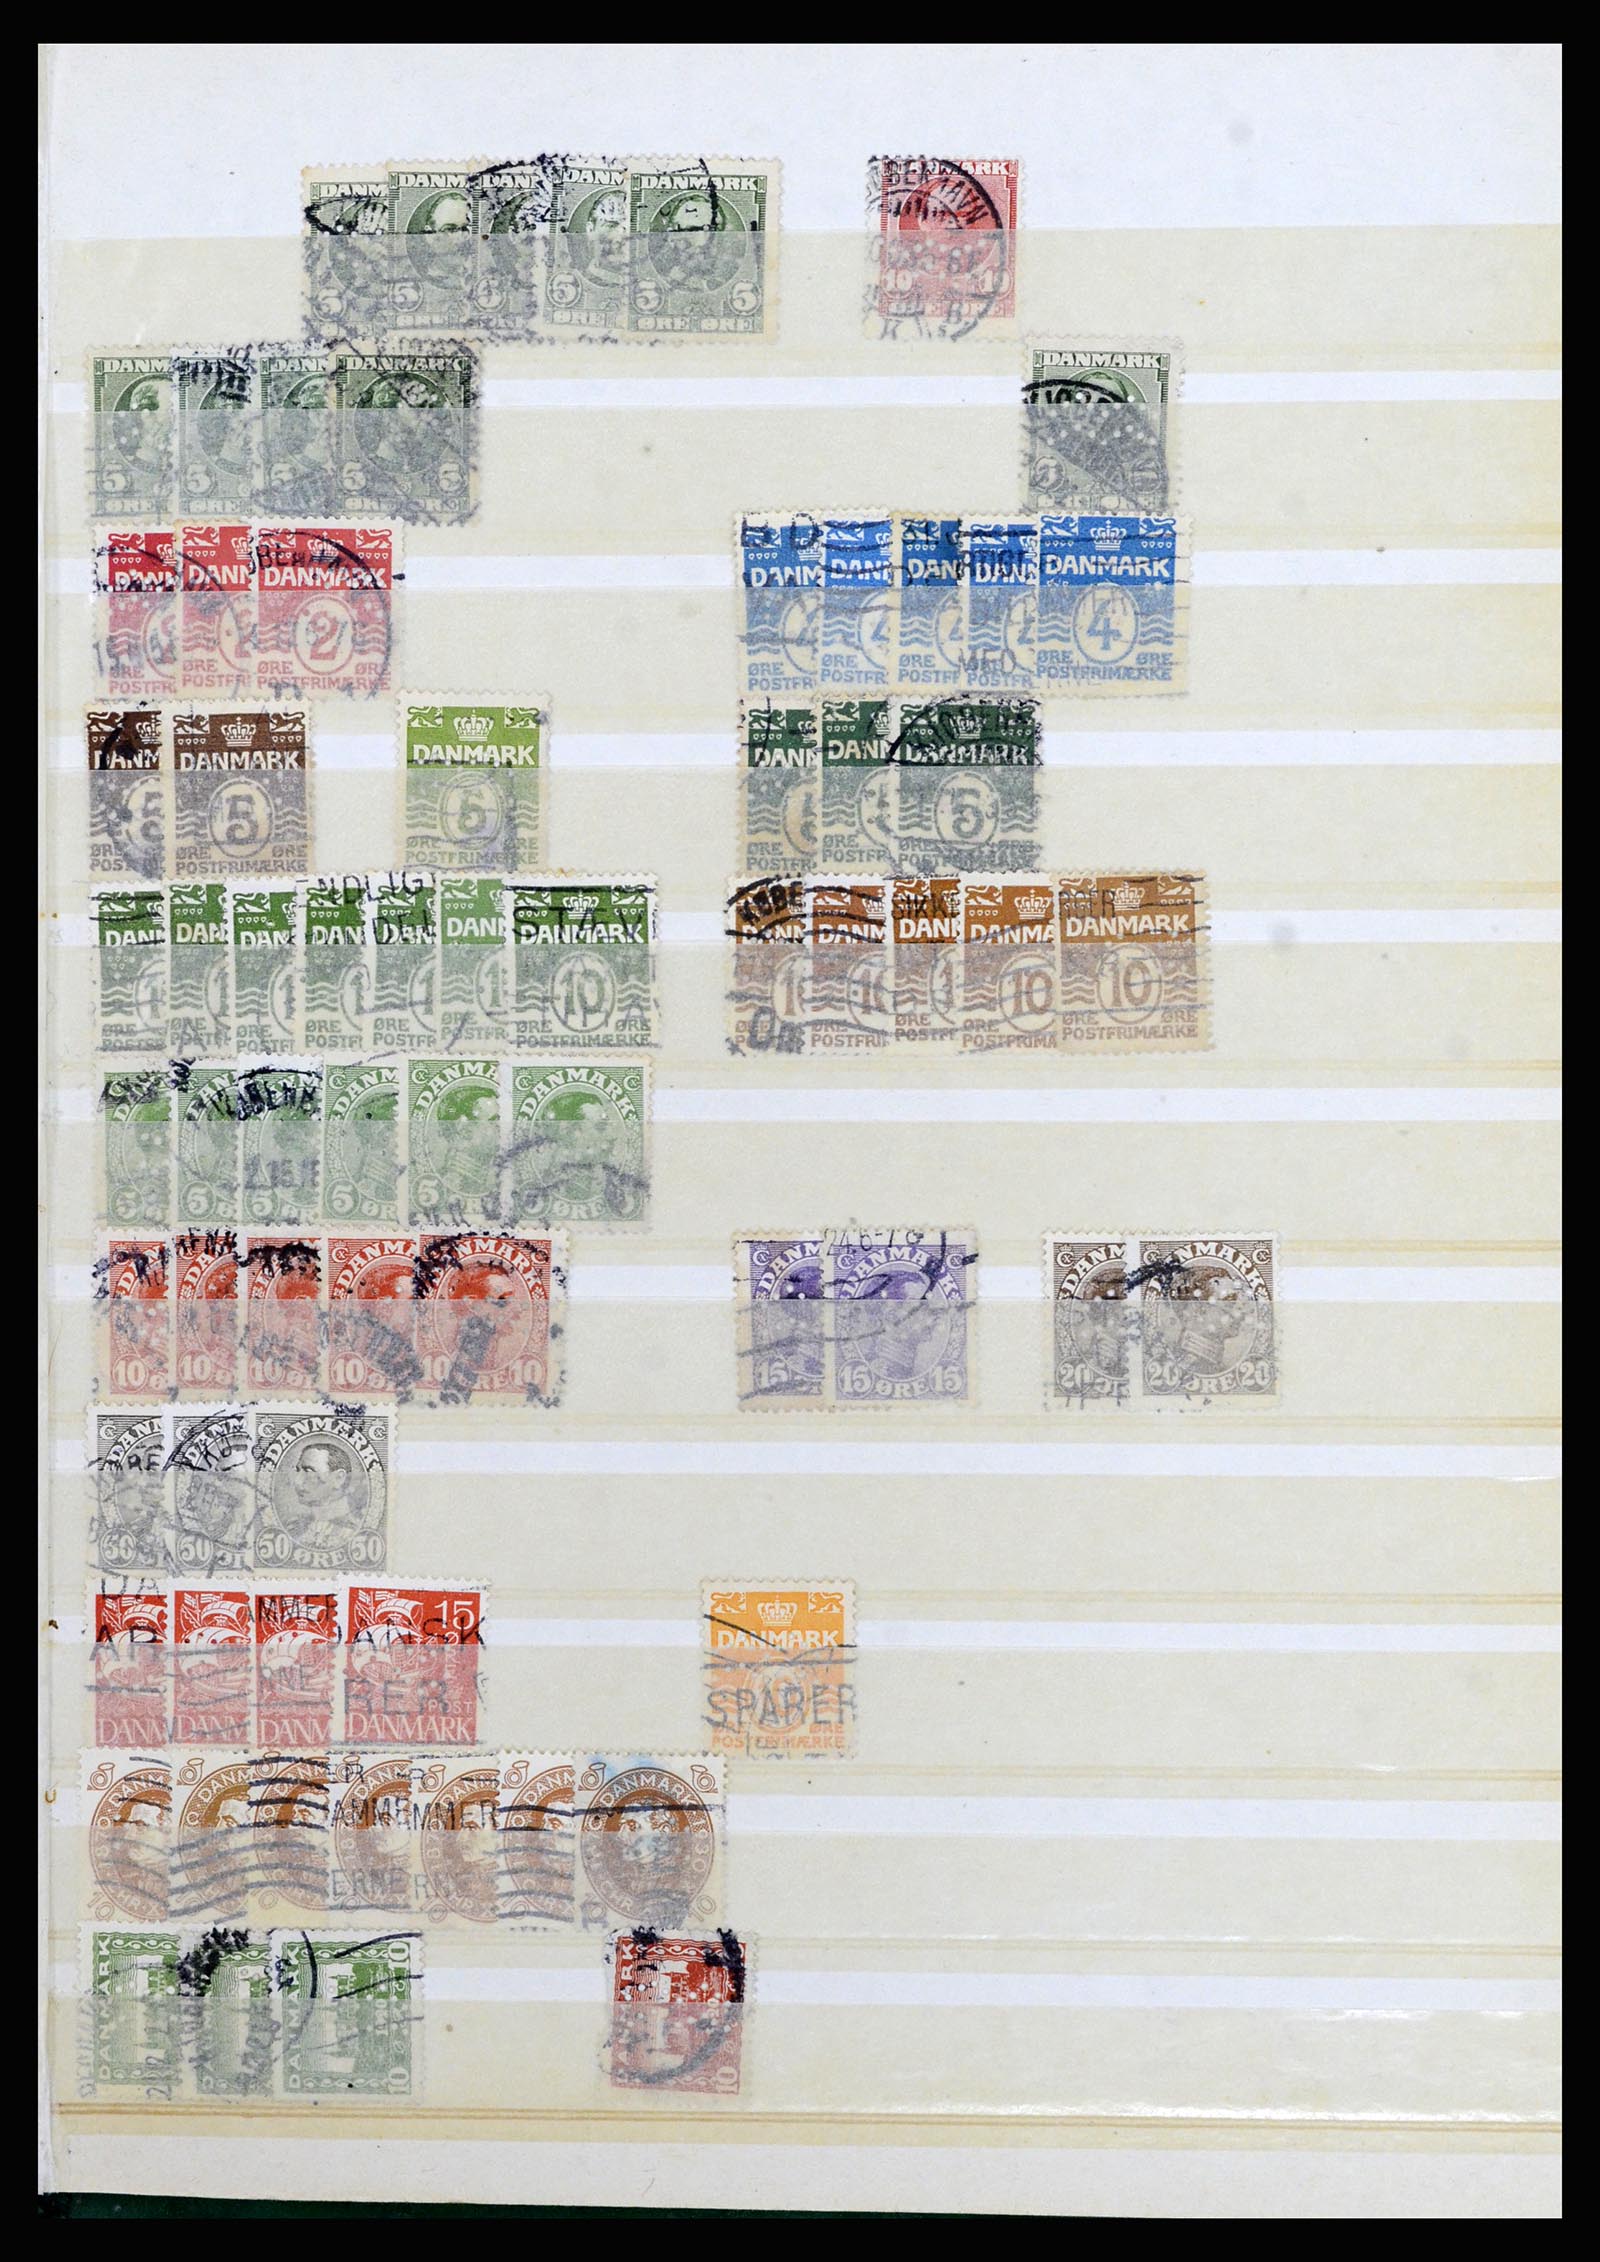 37056 026 - Stamp collection 37056 Denmark perfins.